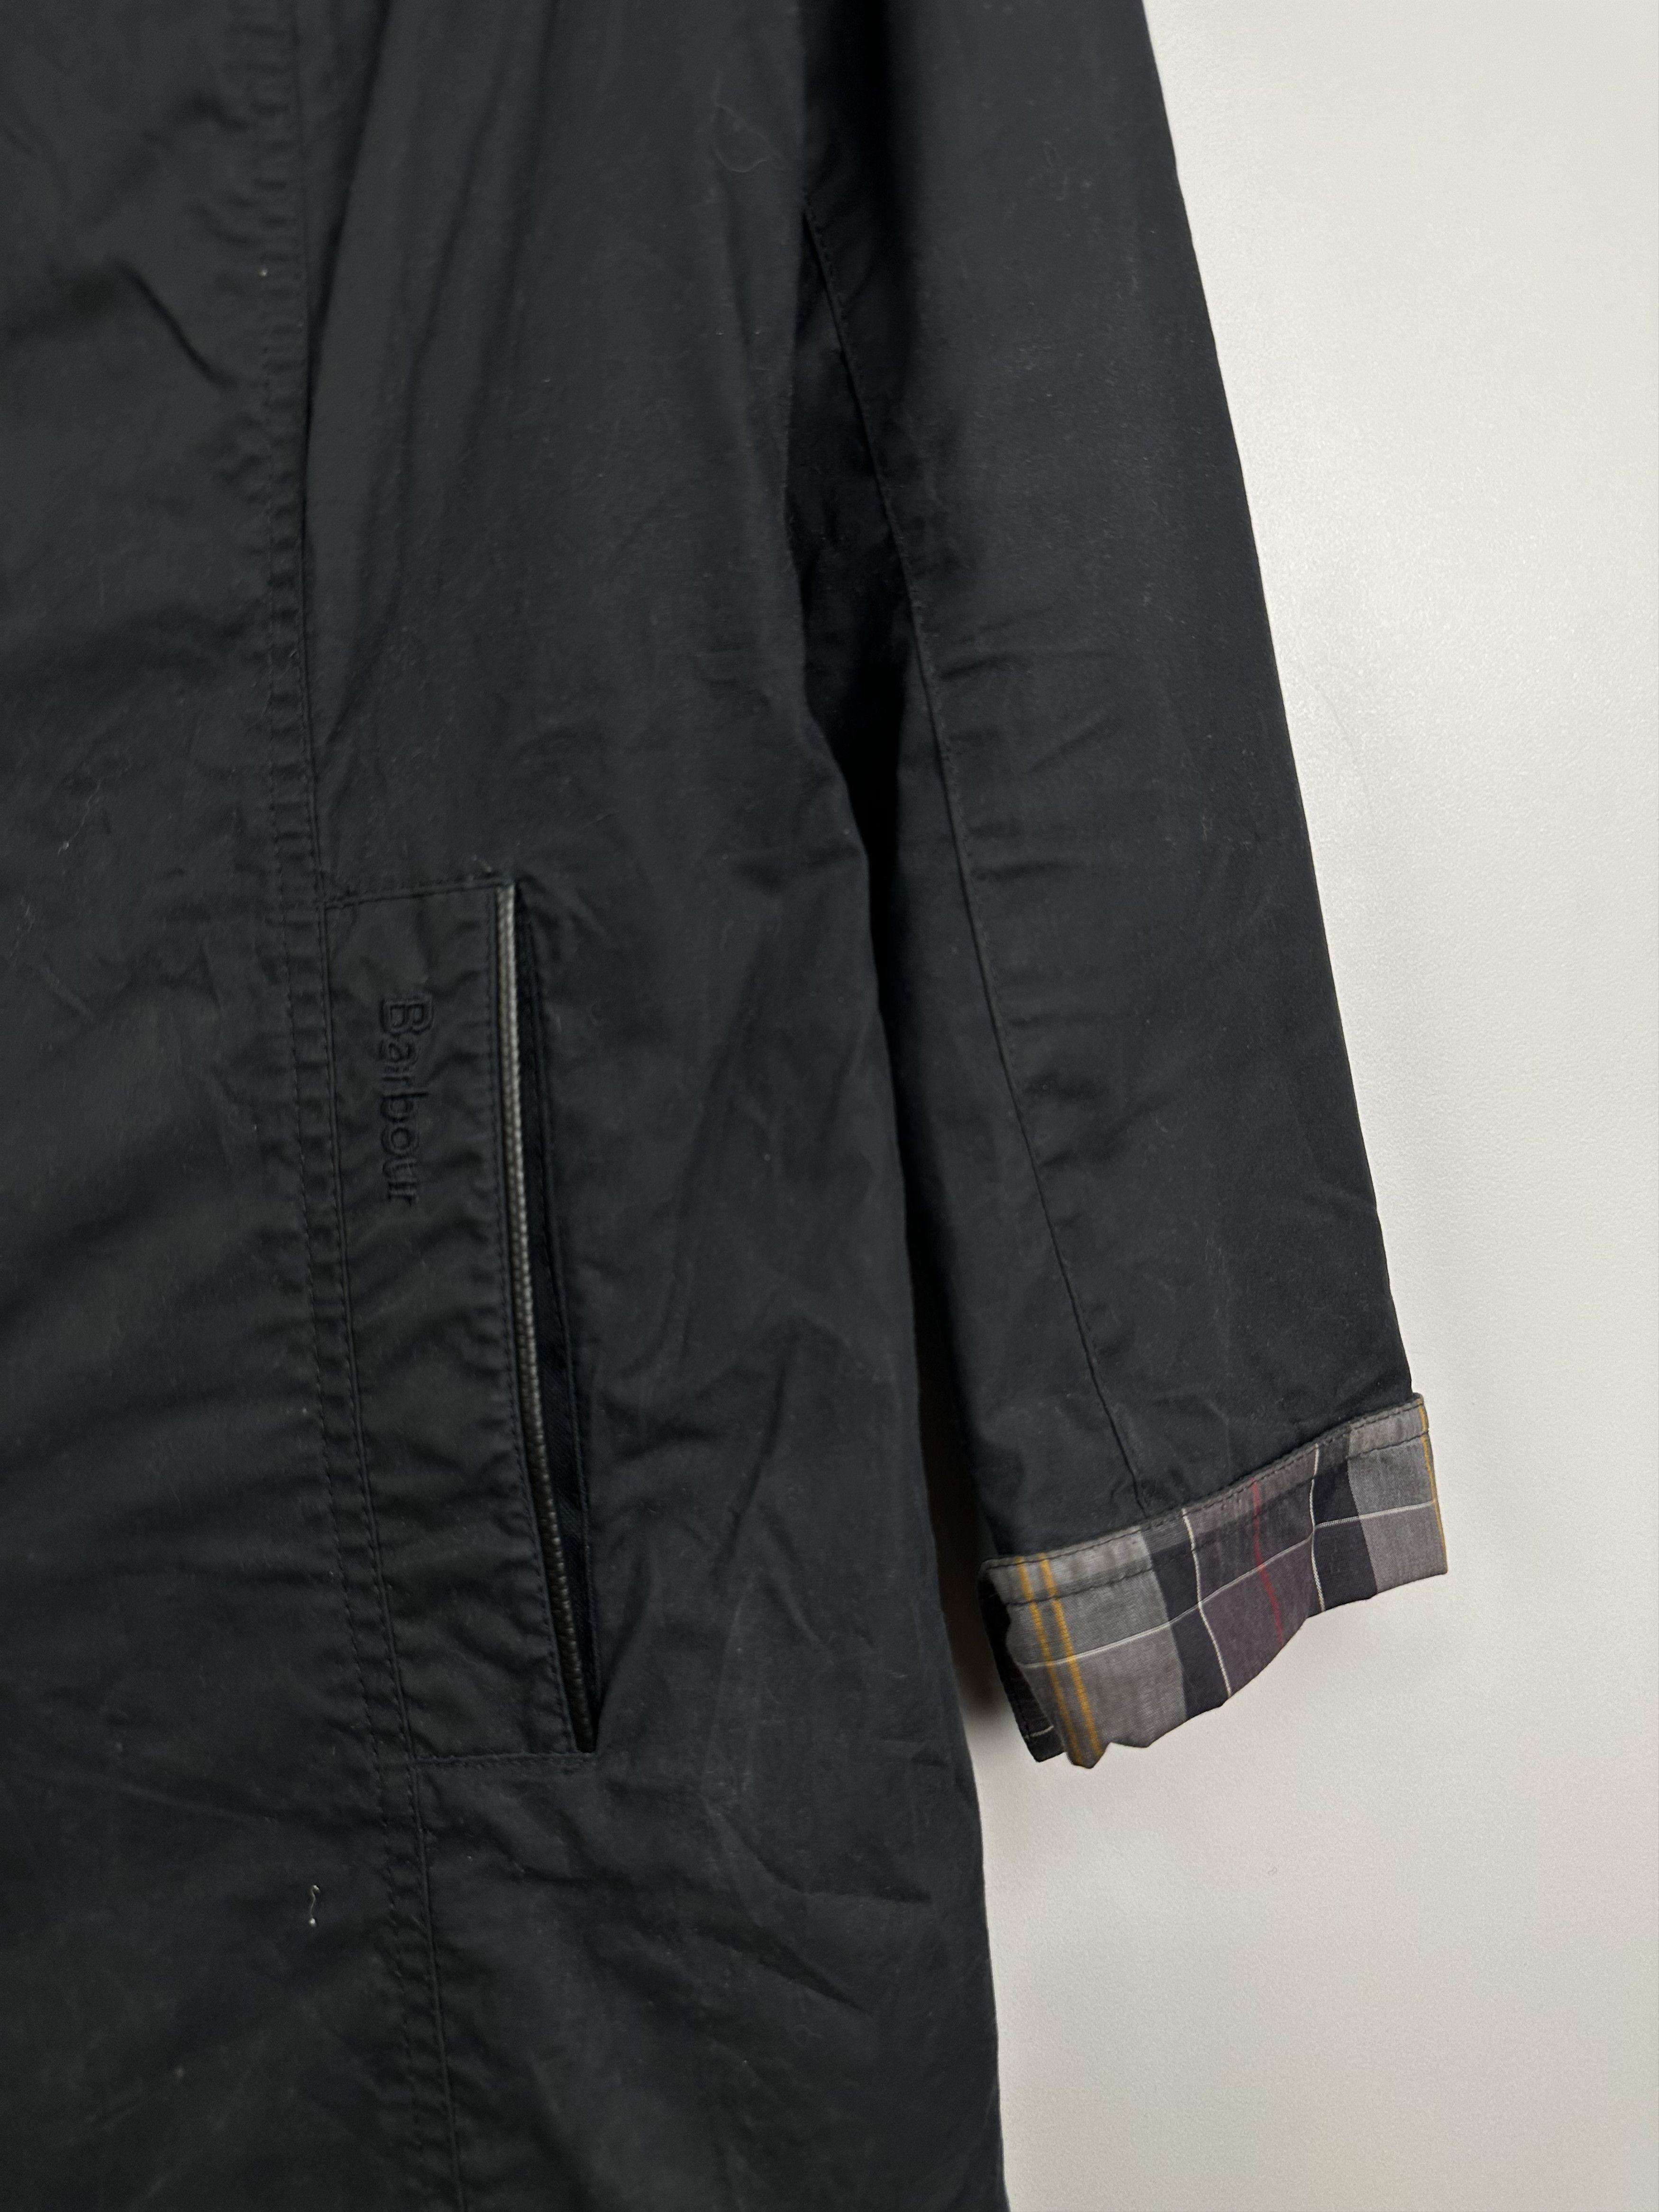 Barbour Women’s Barbour Grasmoor Waxed Jacket Coat Black Size US4 Size S / US 4 / IT 40 - 5 Thumbnail